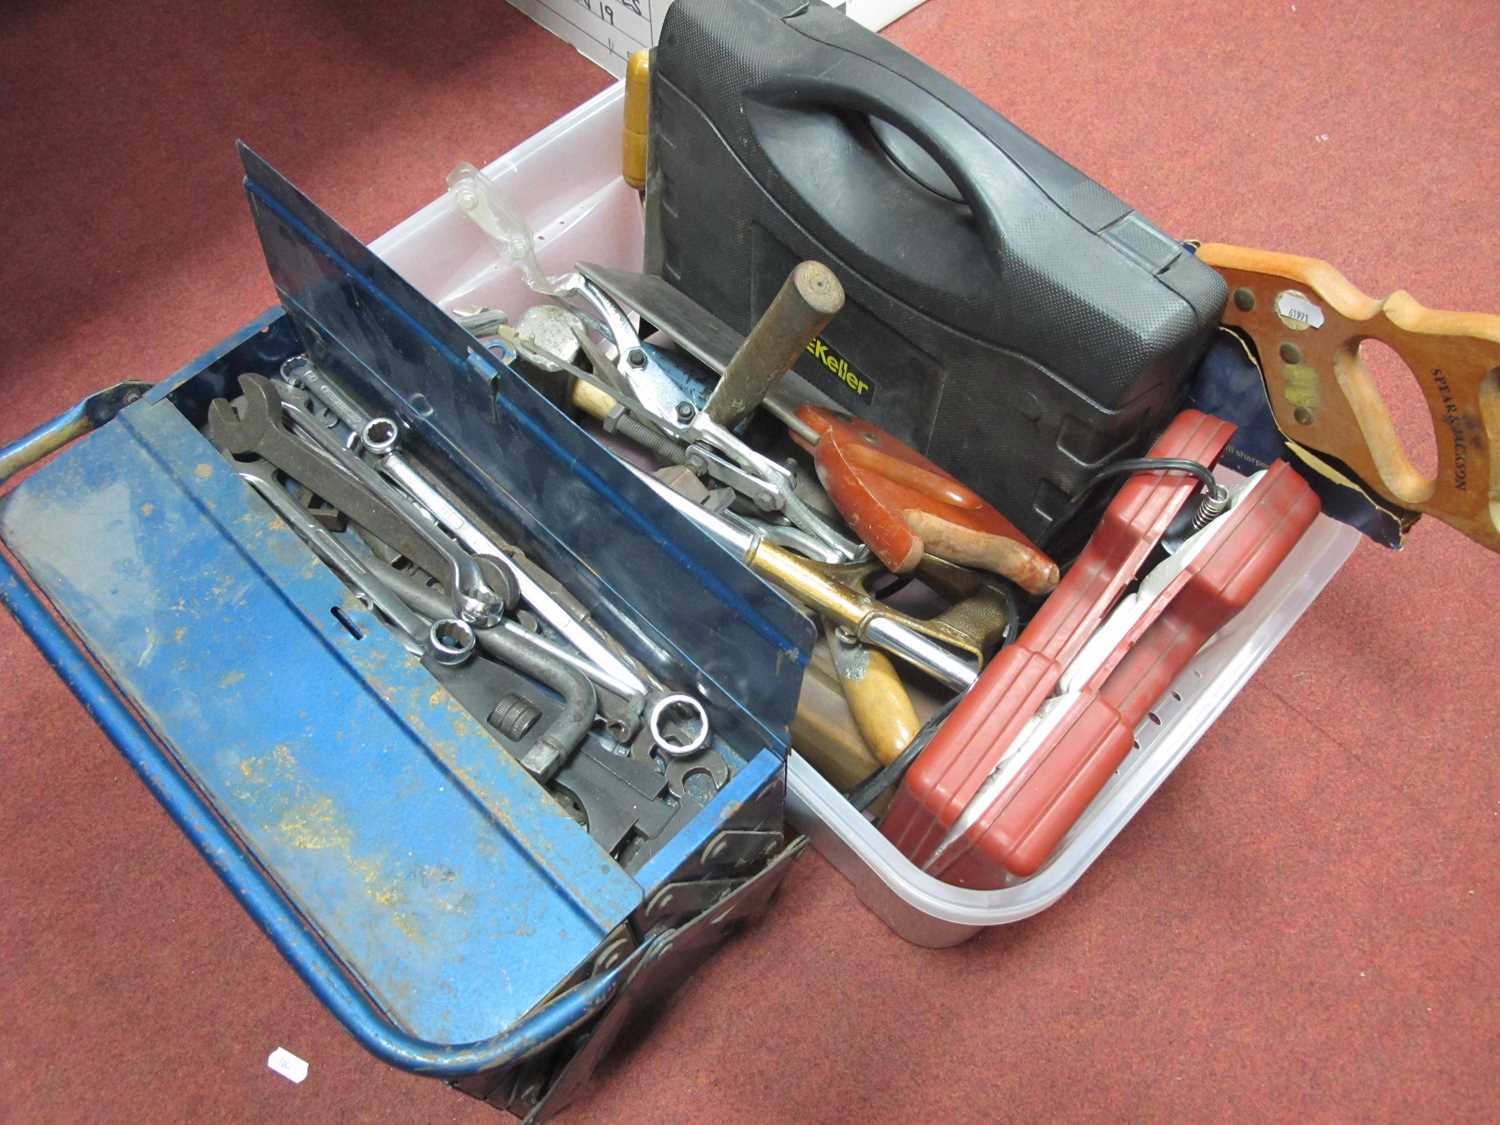 Tools - Spear & Jackson saws, soldering kit, McKeller drill, plane, spanners, club hammer etc, metal